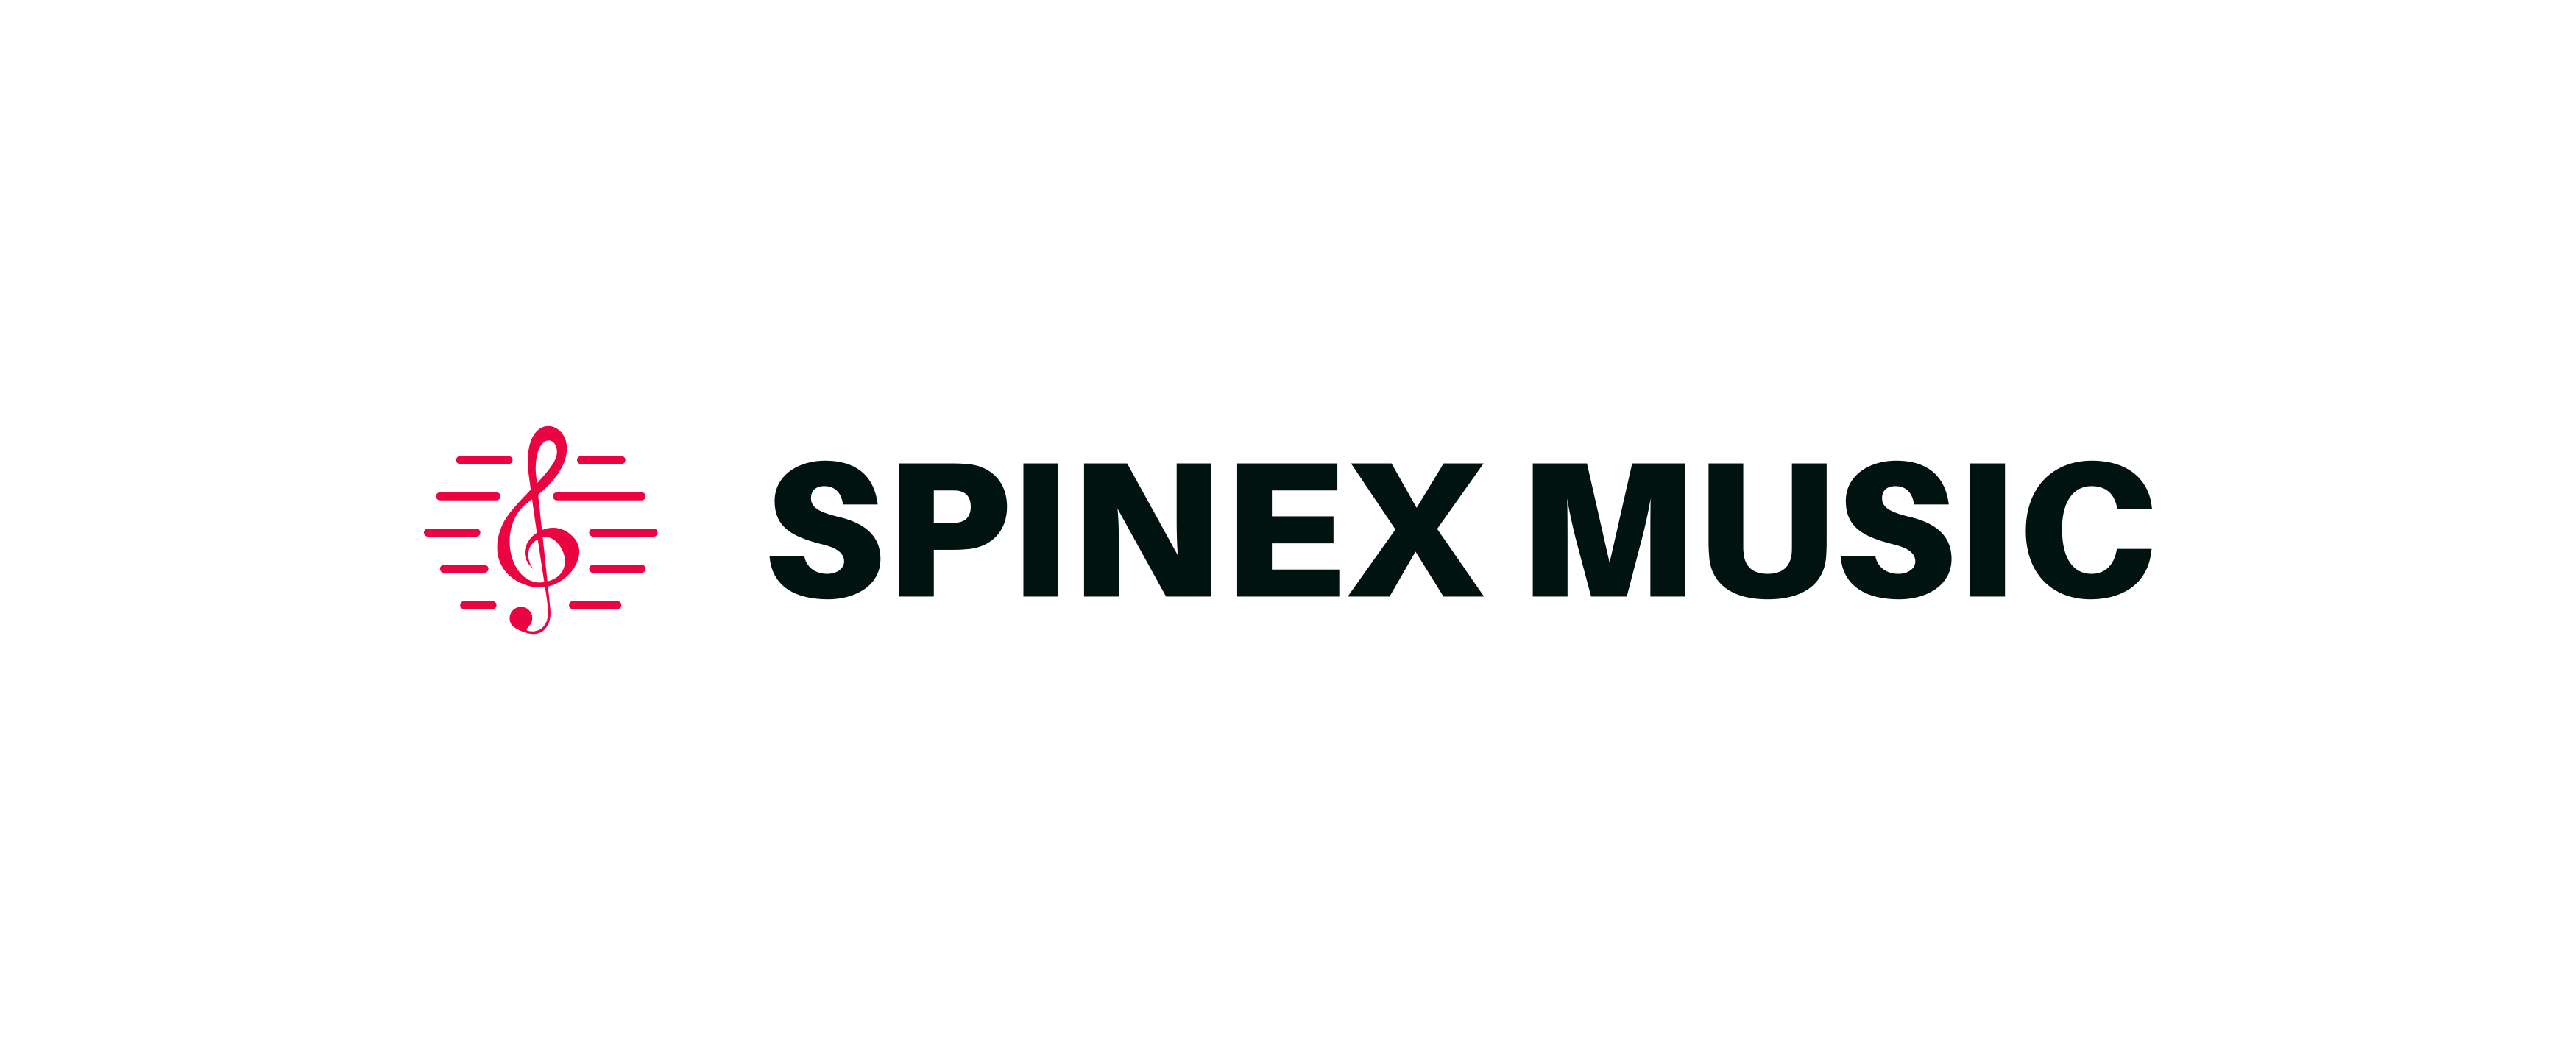 Spinex Music